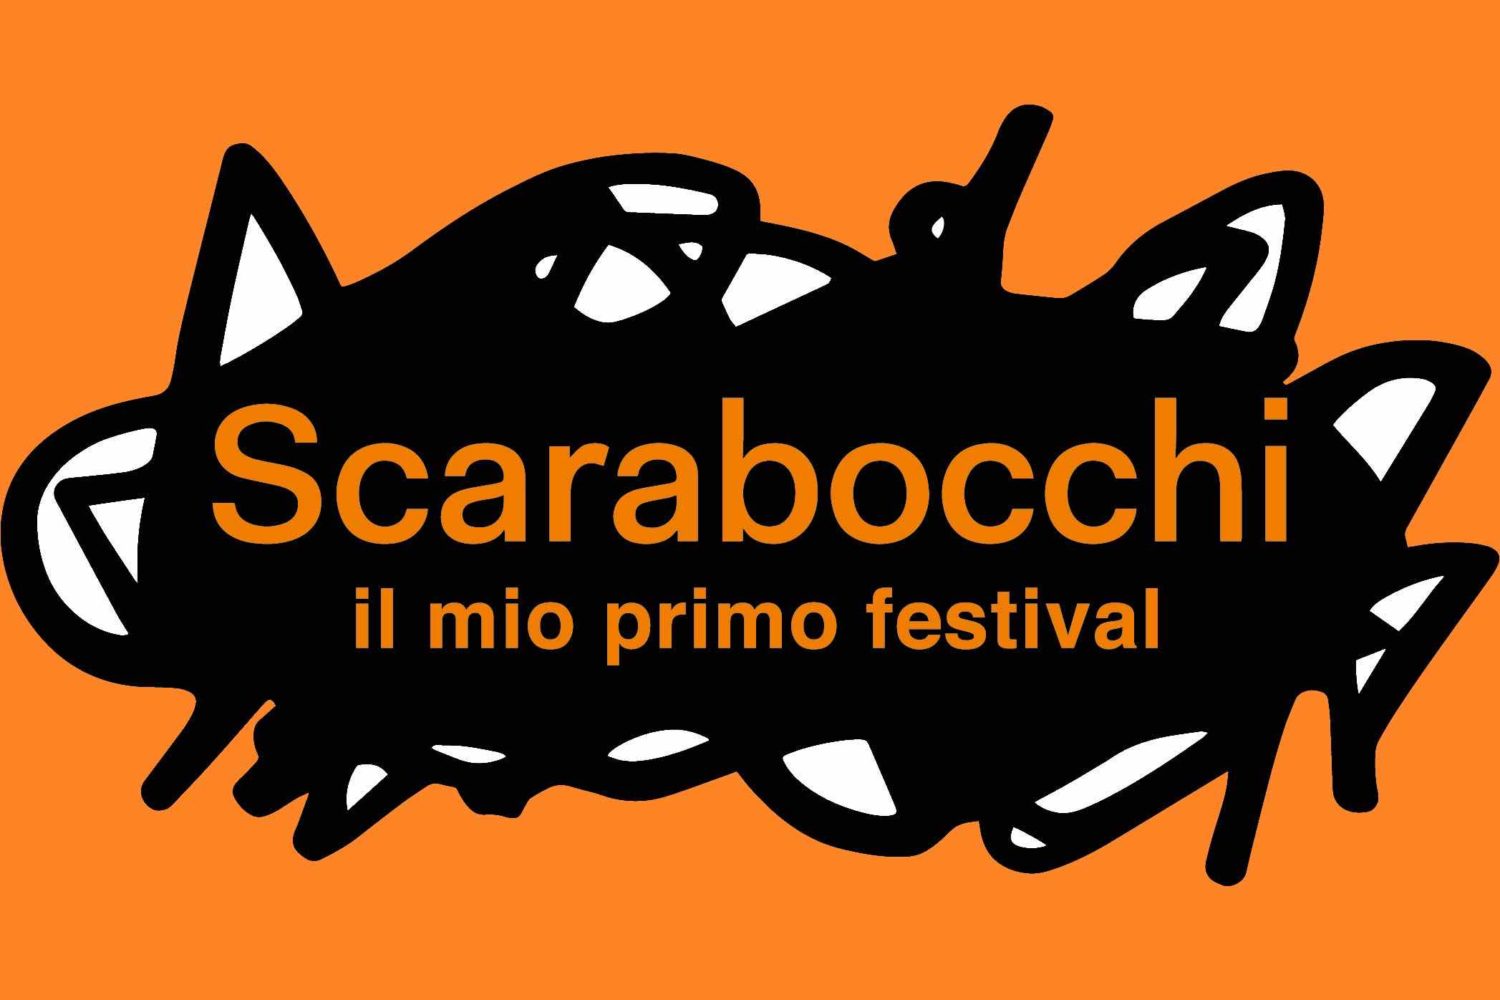 GG scarabocchi 20190